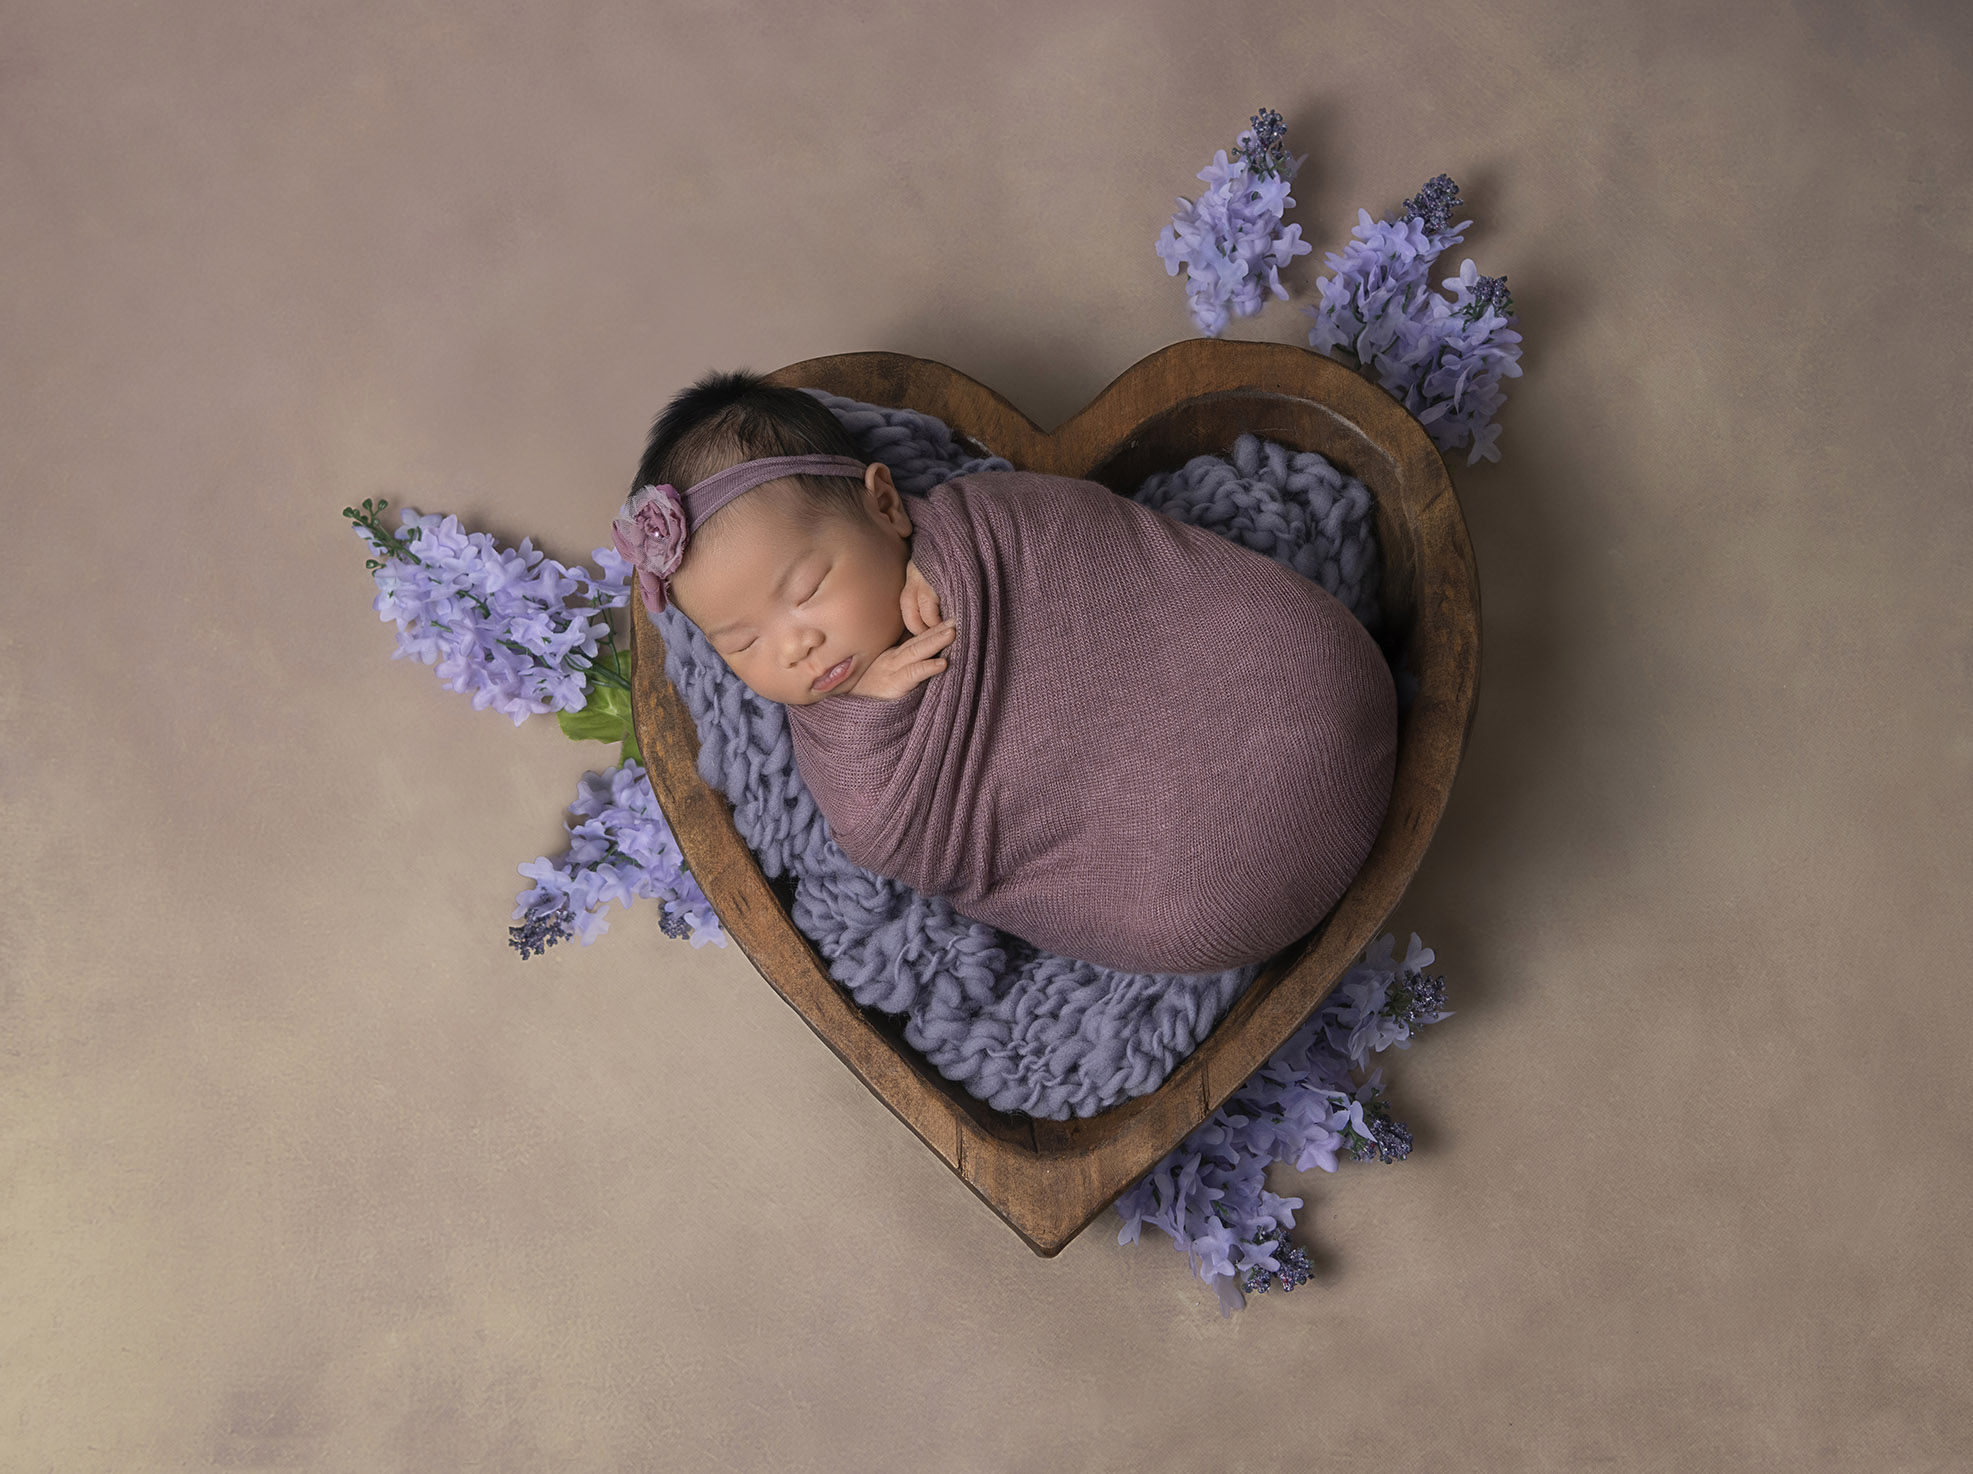 newborn baby in a heart shaped bowl surrounded by purple flowerspurple flowers